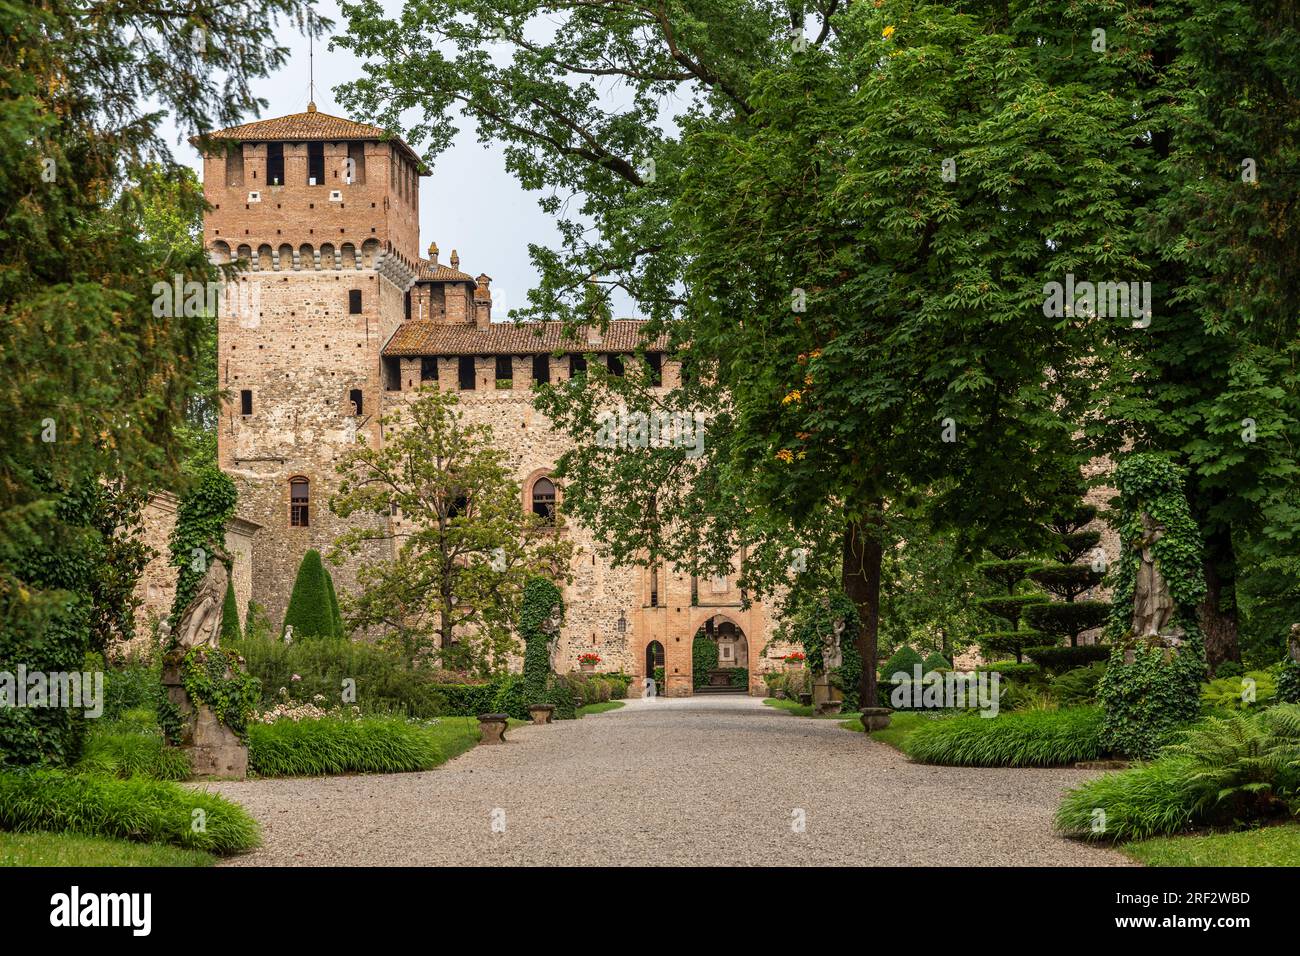 The beautiful castle of Grazzano Visconti surrounded by gardens, Emilia-Romagna, Italy Stock Photo